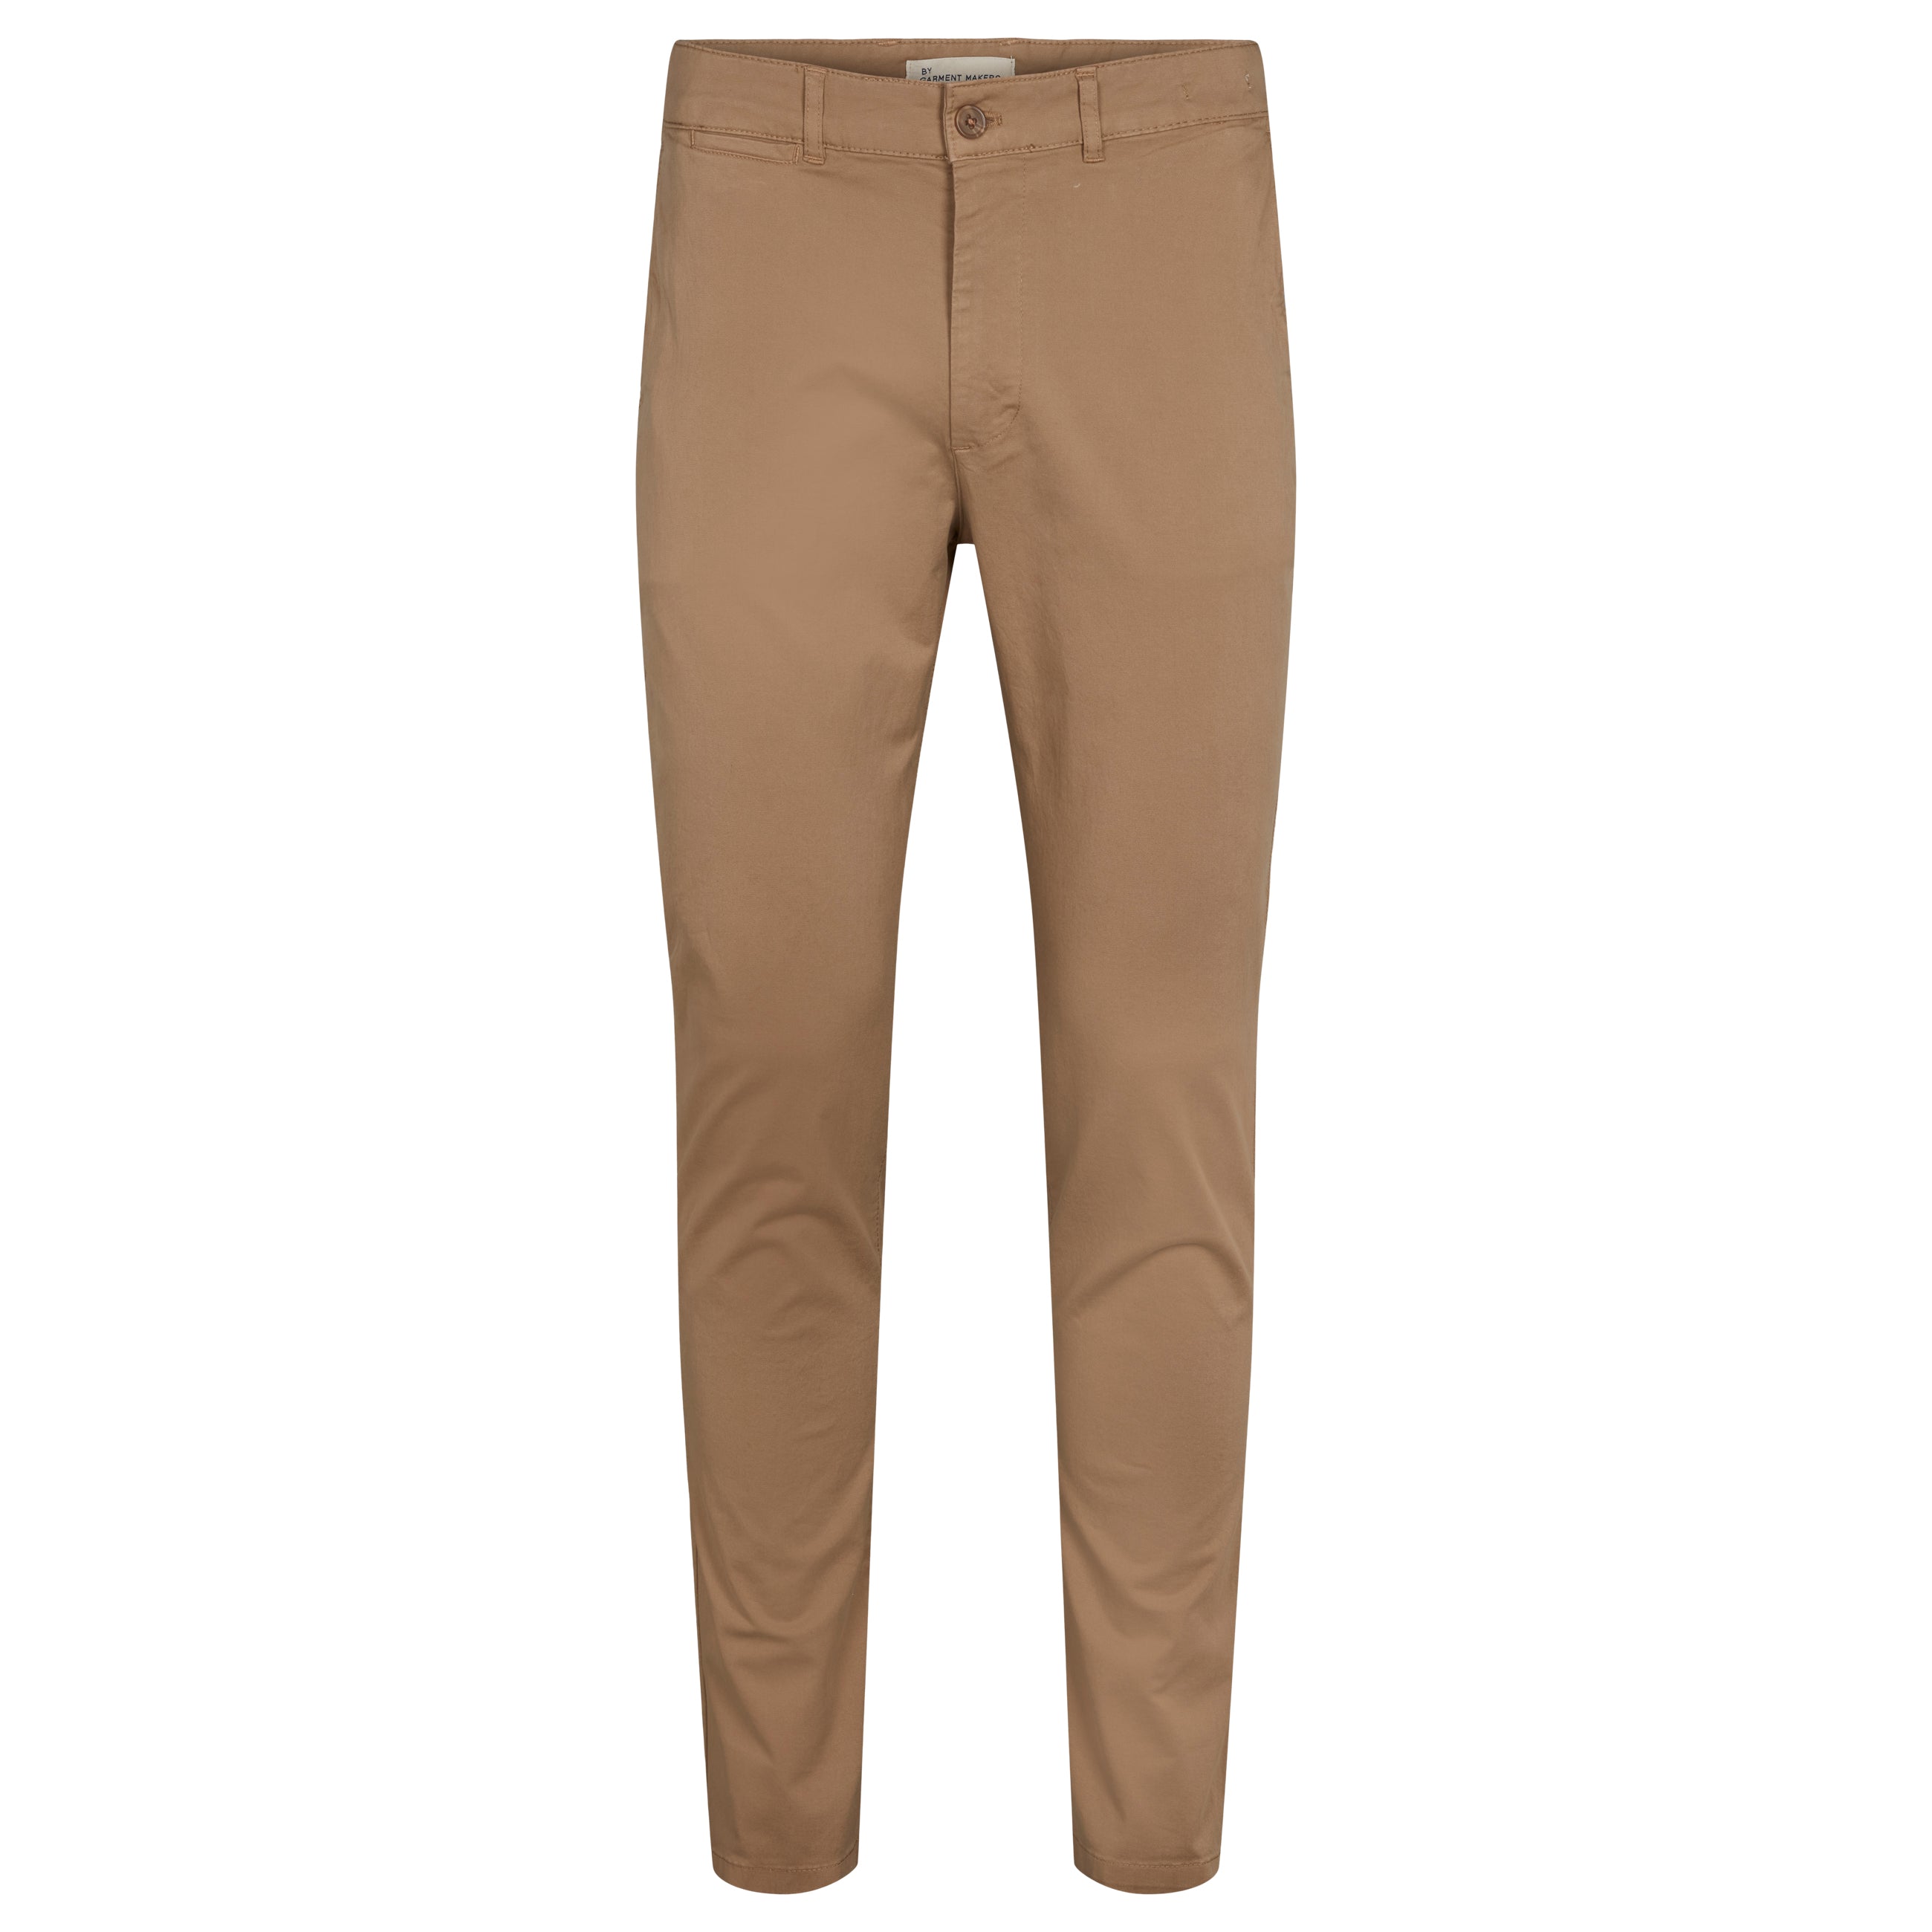 By Garment Makers The Organic Chino Pants GOTS Pants 2851 Khaki